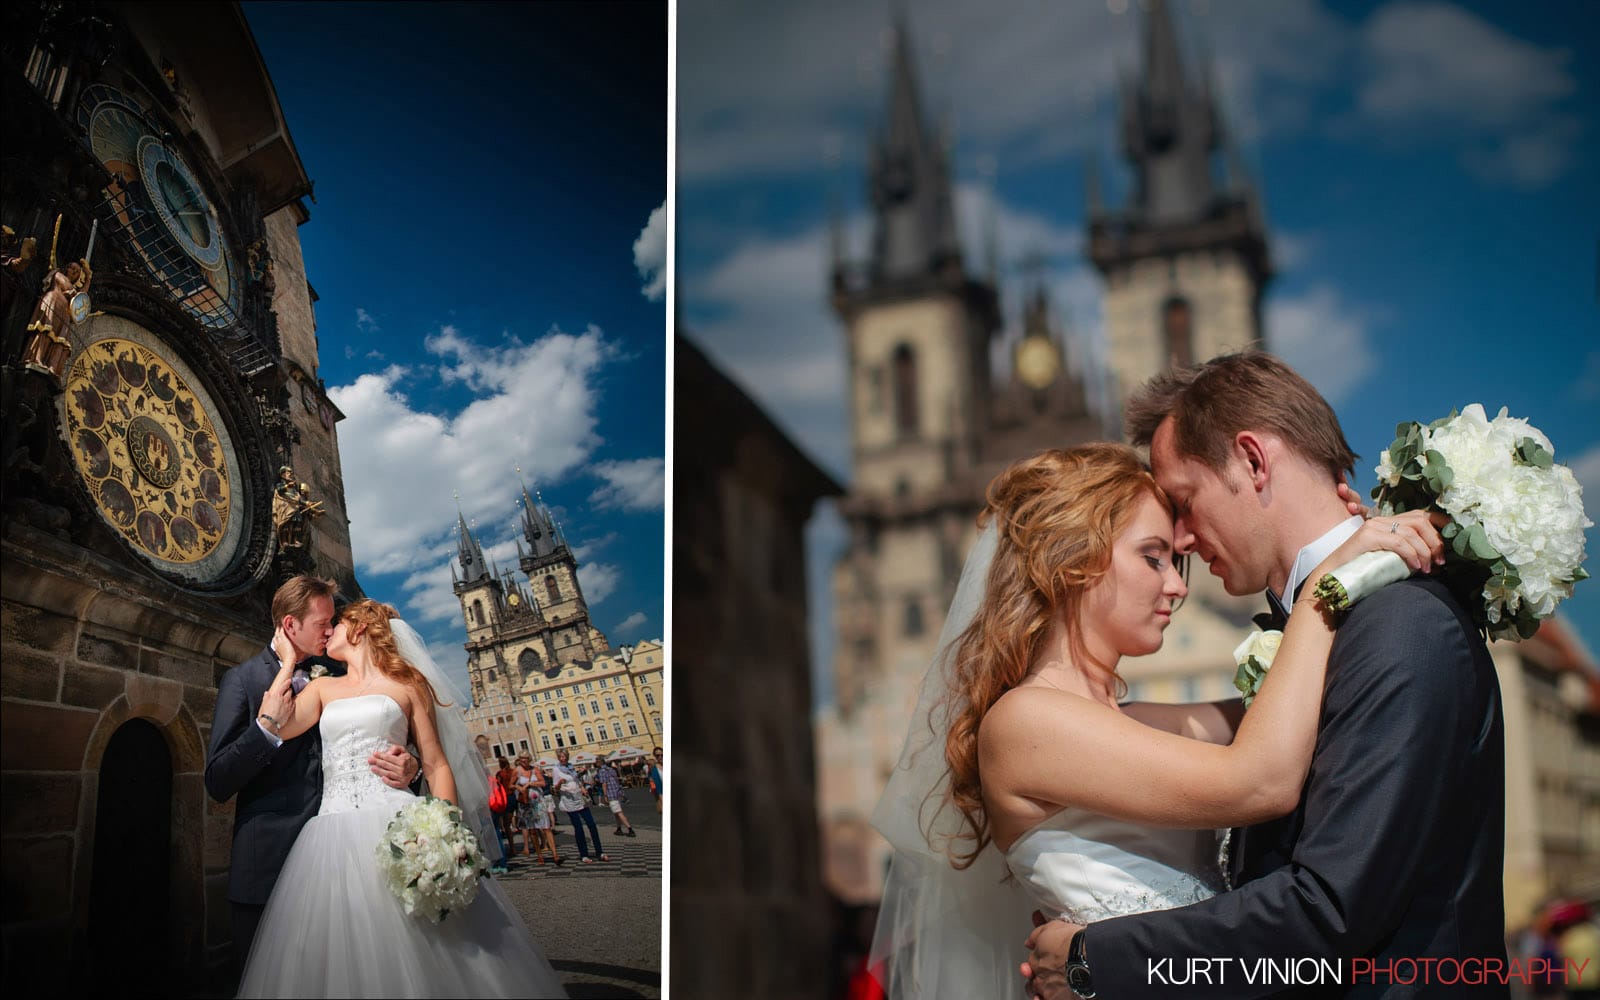 Elopement wedding Prague / Polya & Dirk wedding portraits at the Astronomical Clock